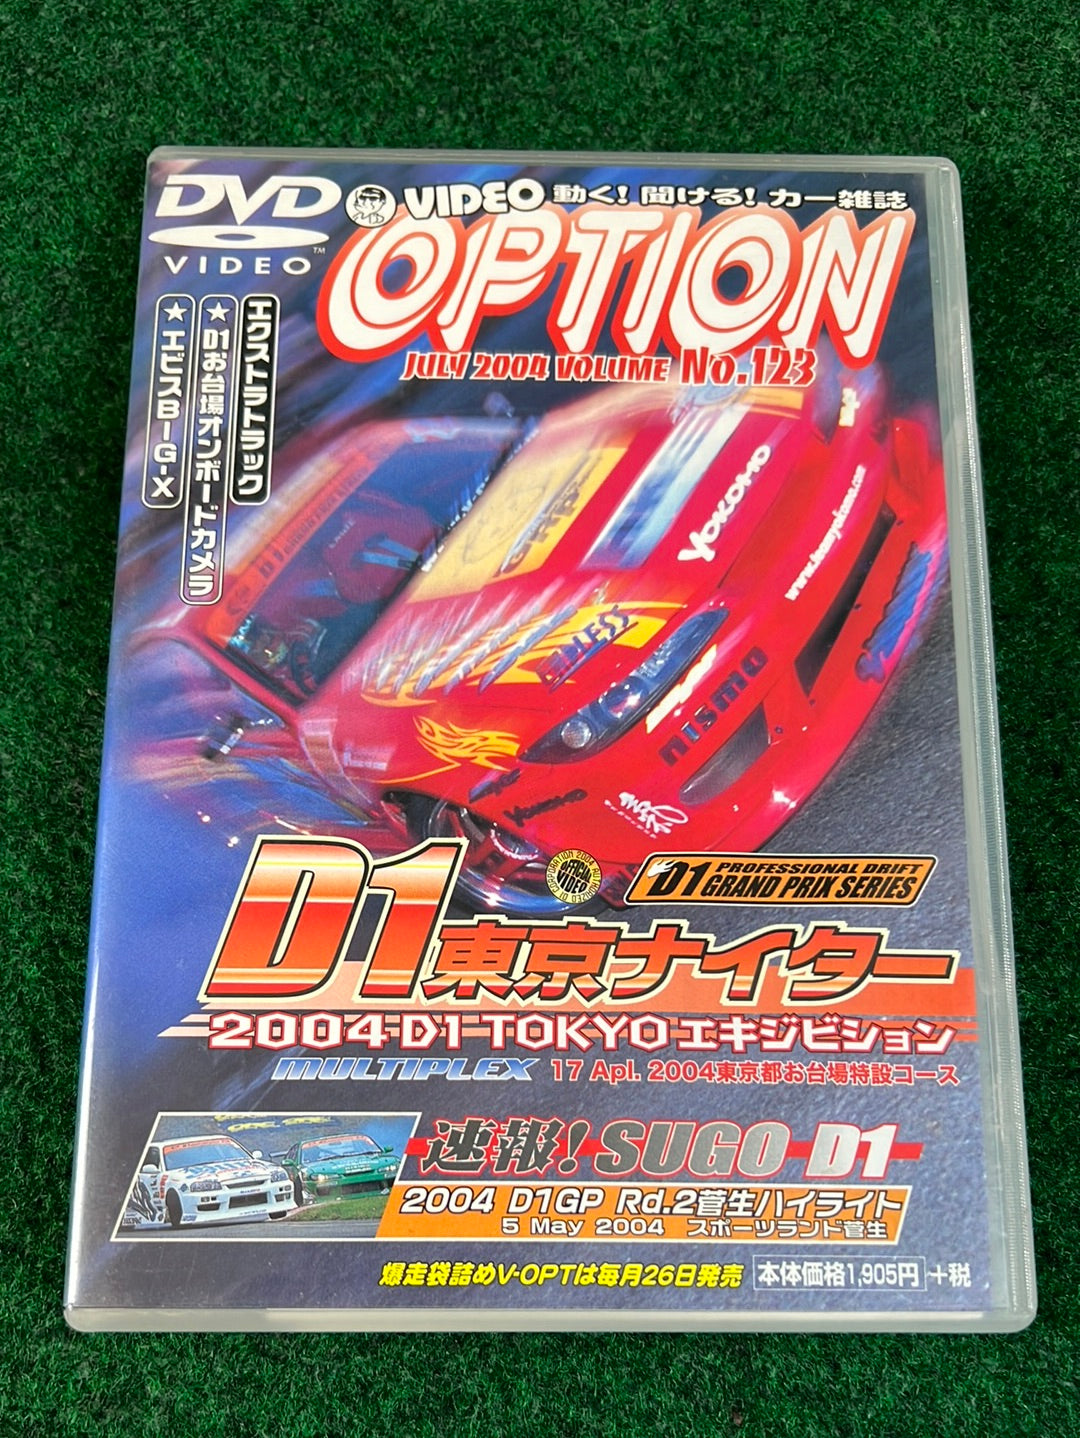 Option Video DVD - July 2004 Vol. 123 DVD